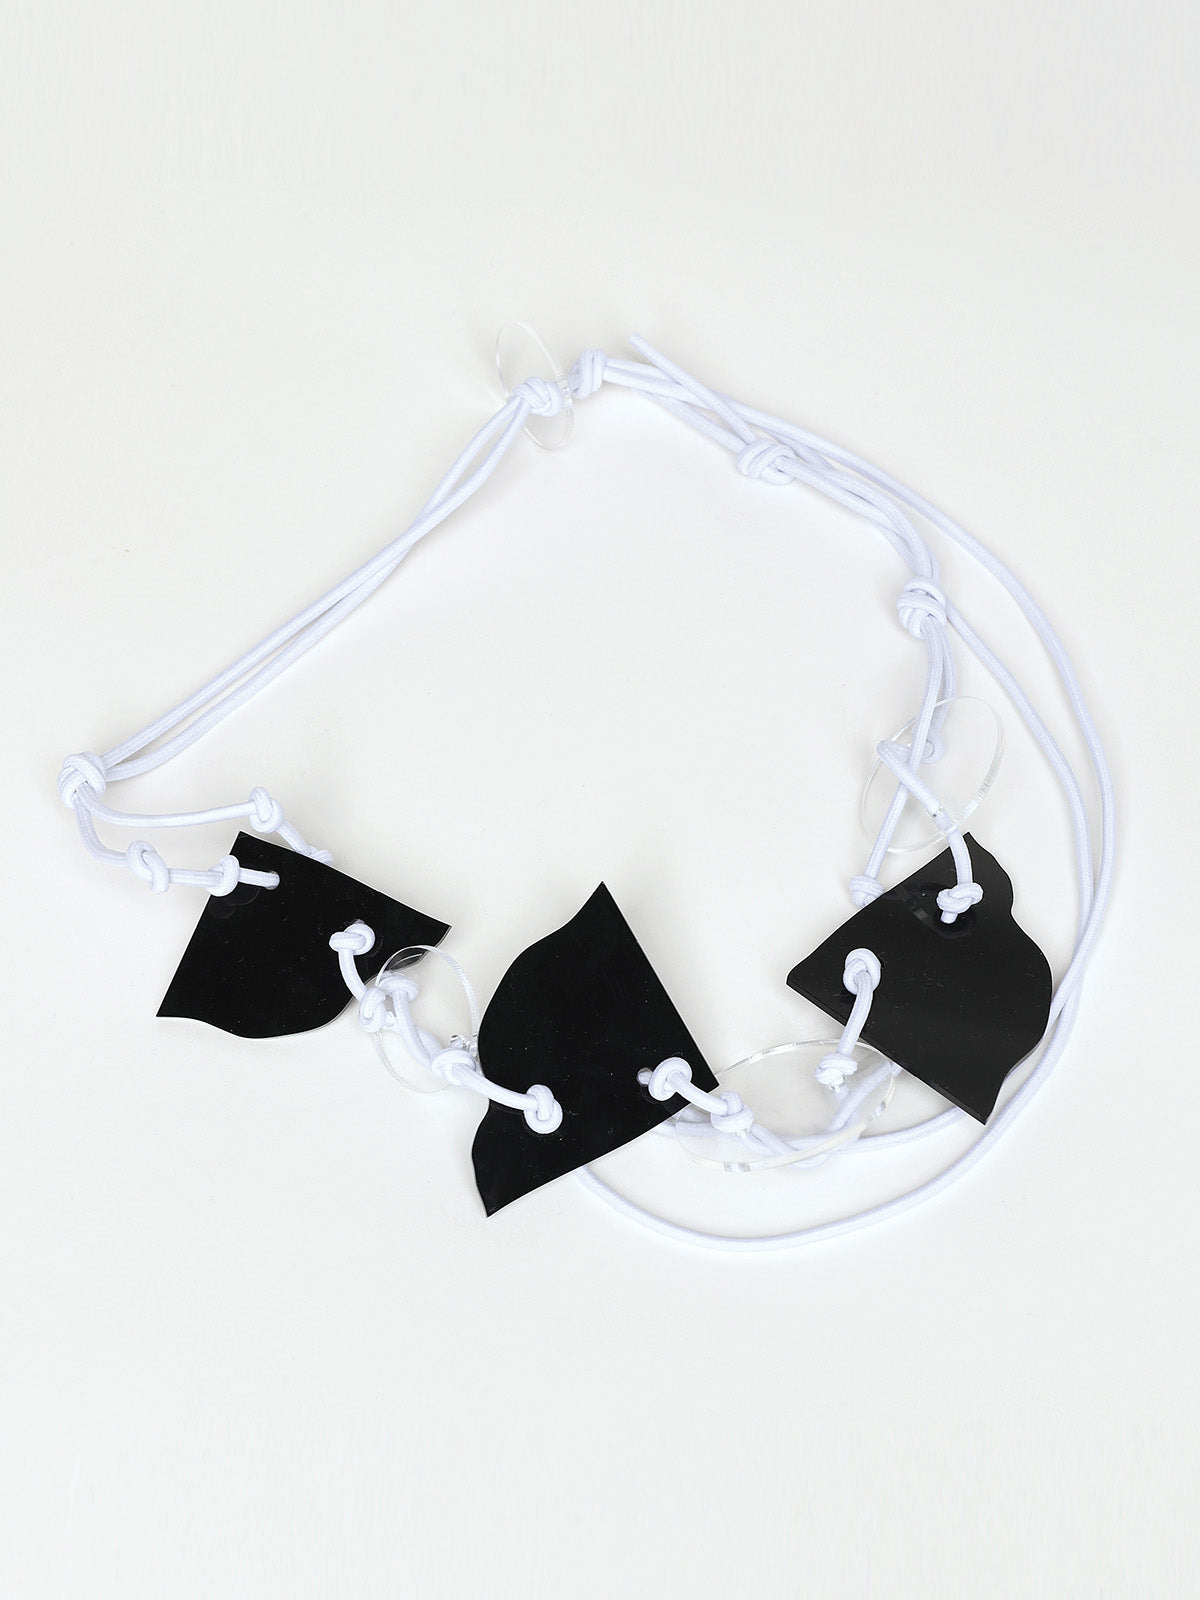 Igor Dobranic Acrylic Shapes on White Cord Necklace, Black - Statement Boutique